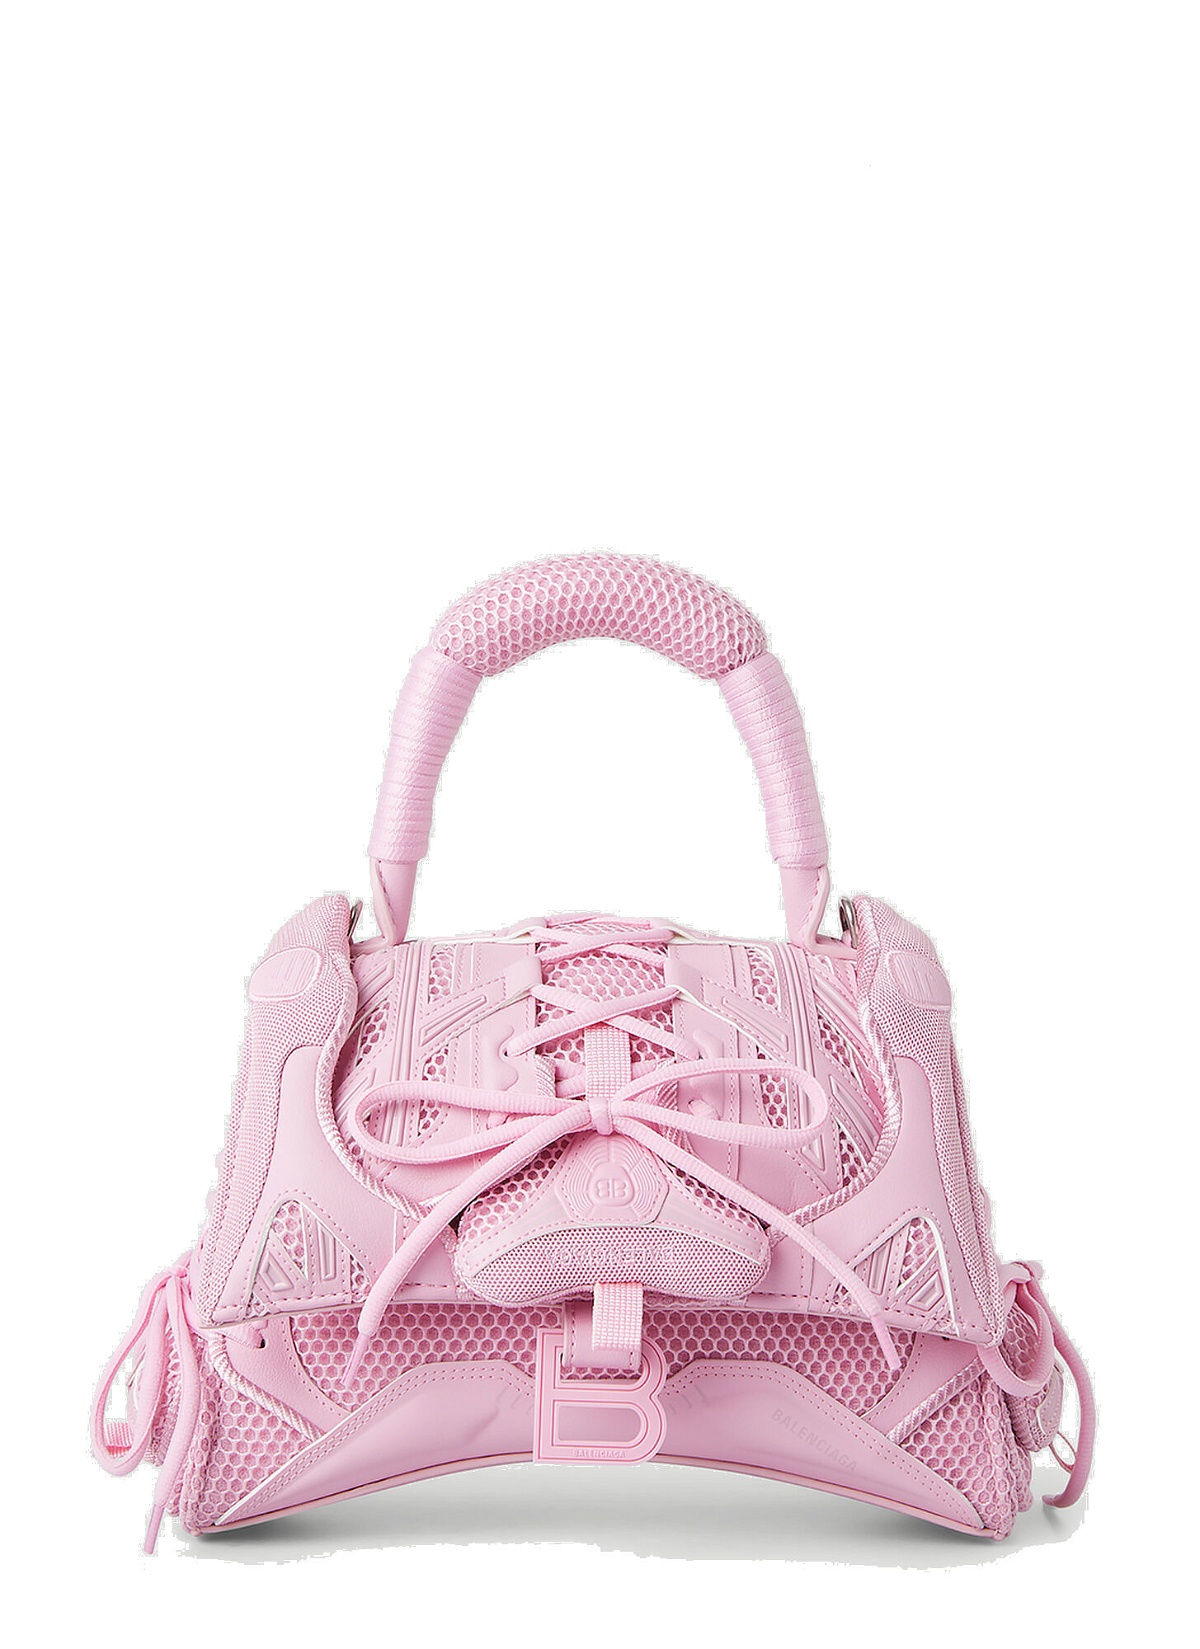 Sneakerhead small handbag